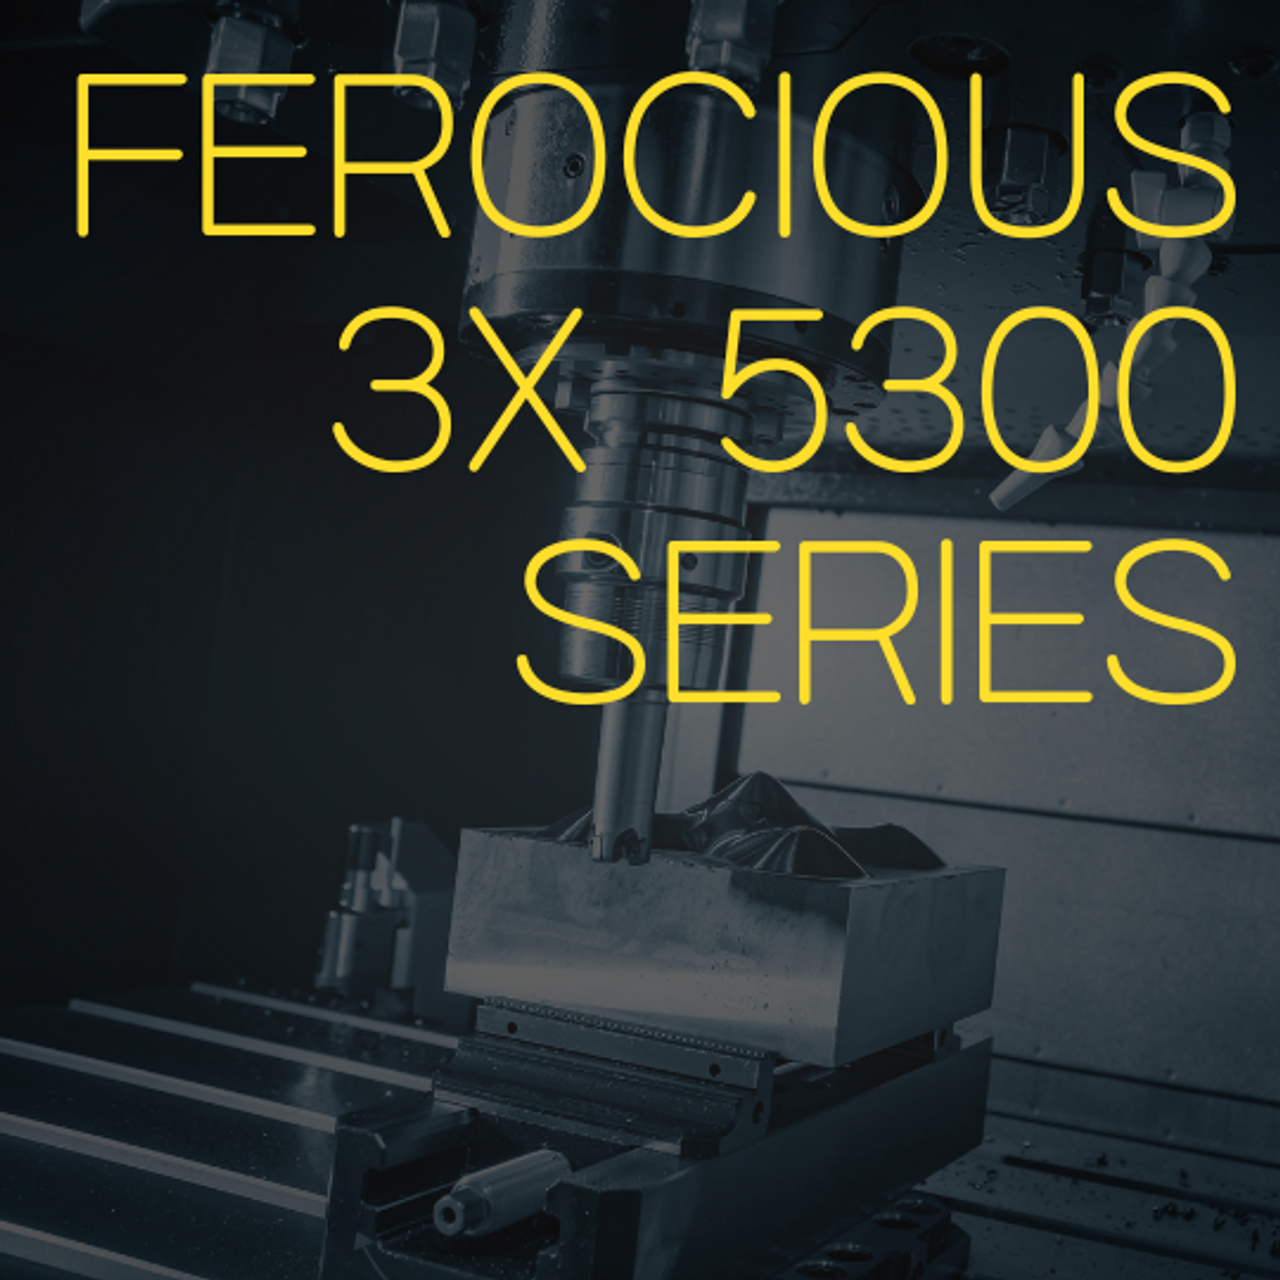 Ferocious 3X 5300 Series